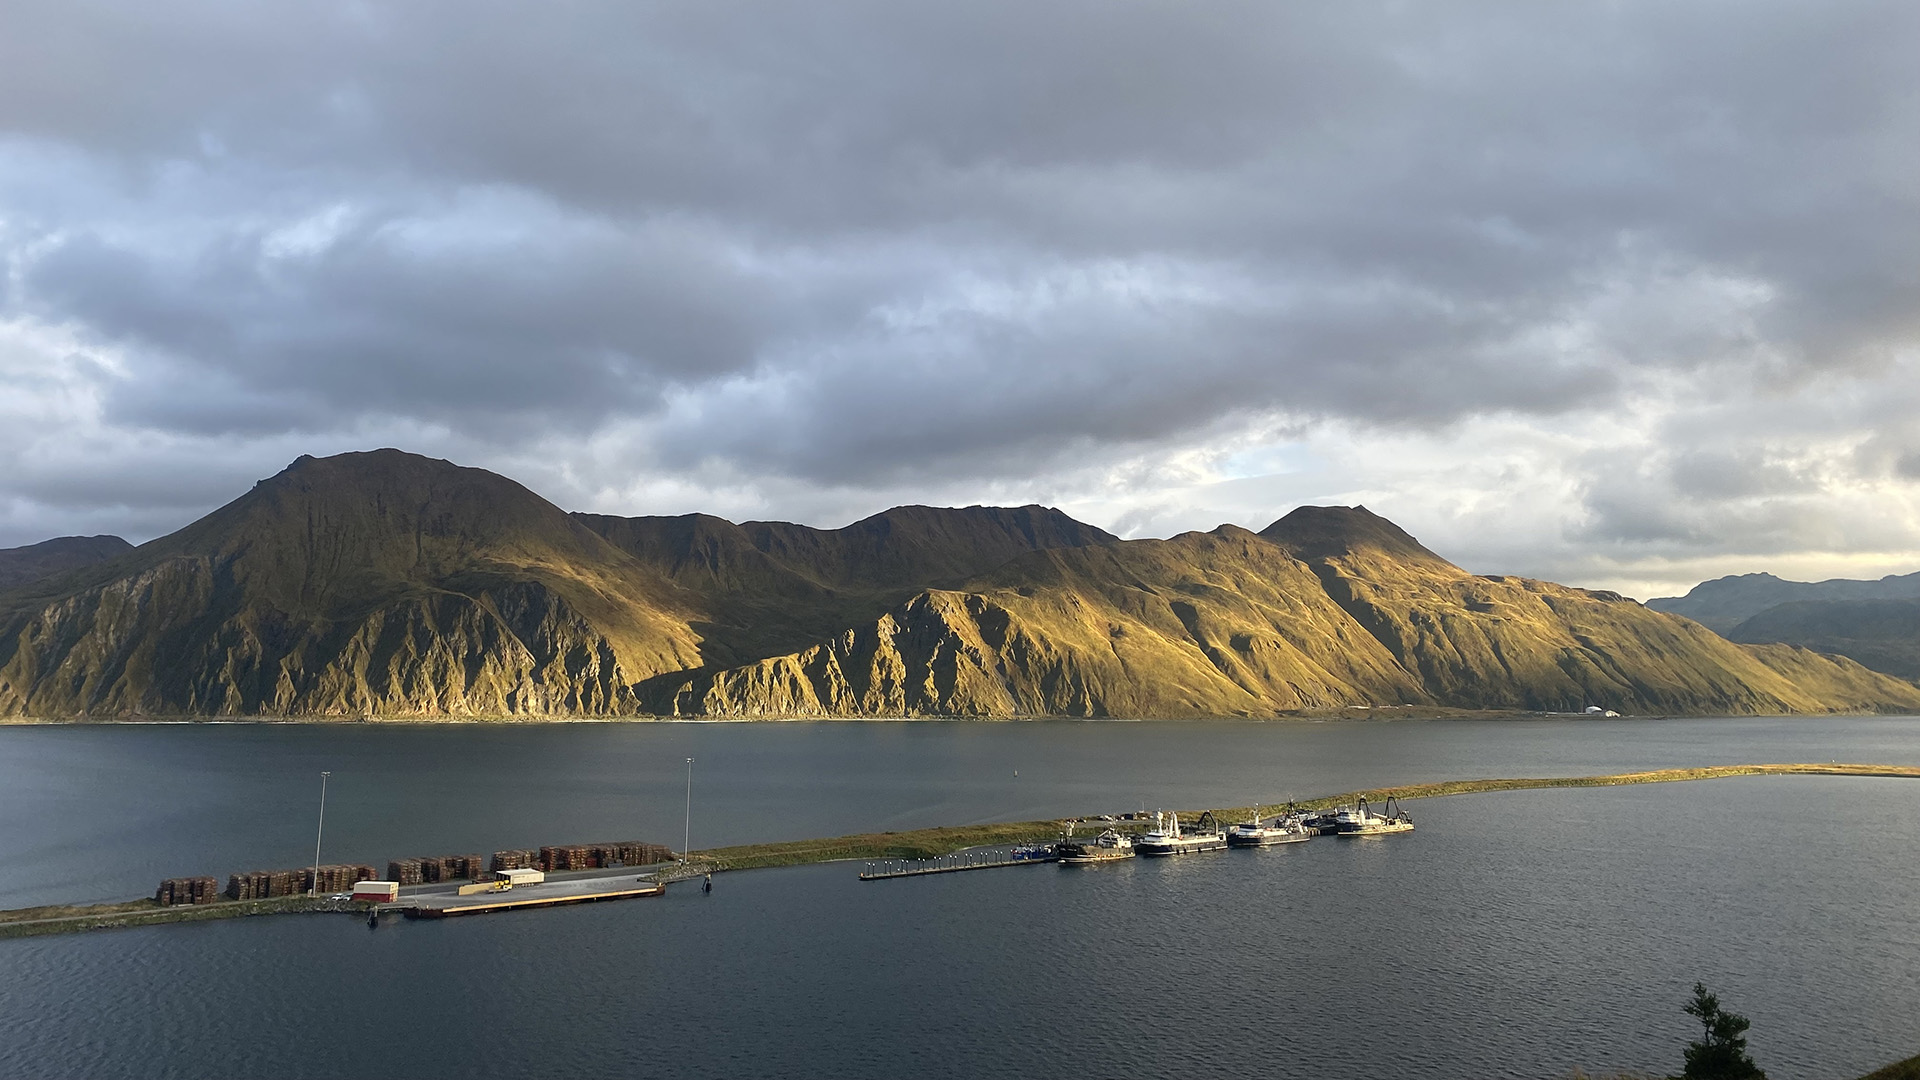 Unalaska Island is one of many beautiful, and geologically active, Aleutian Islands